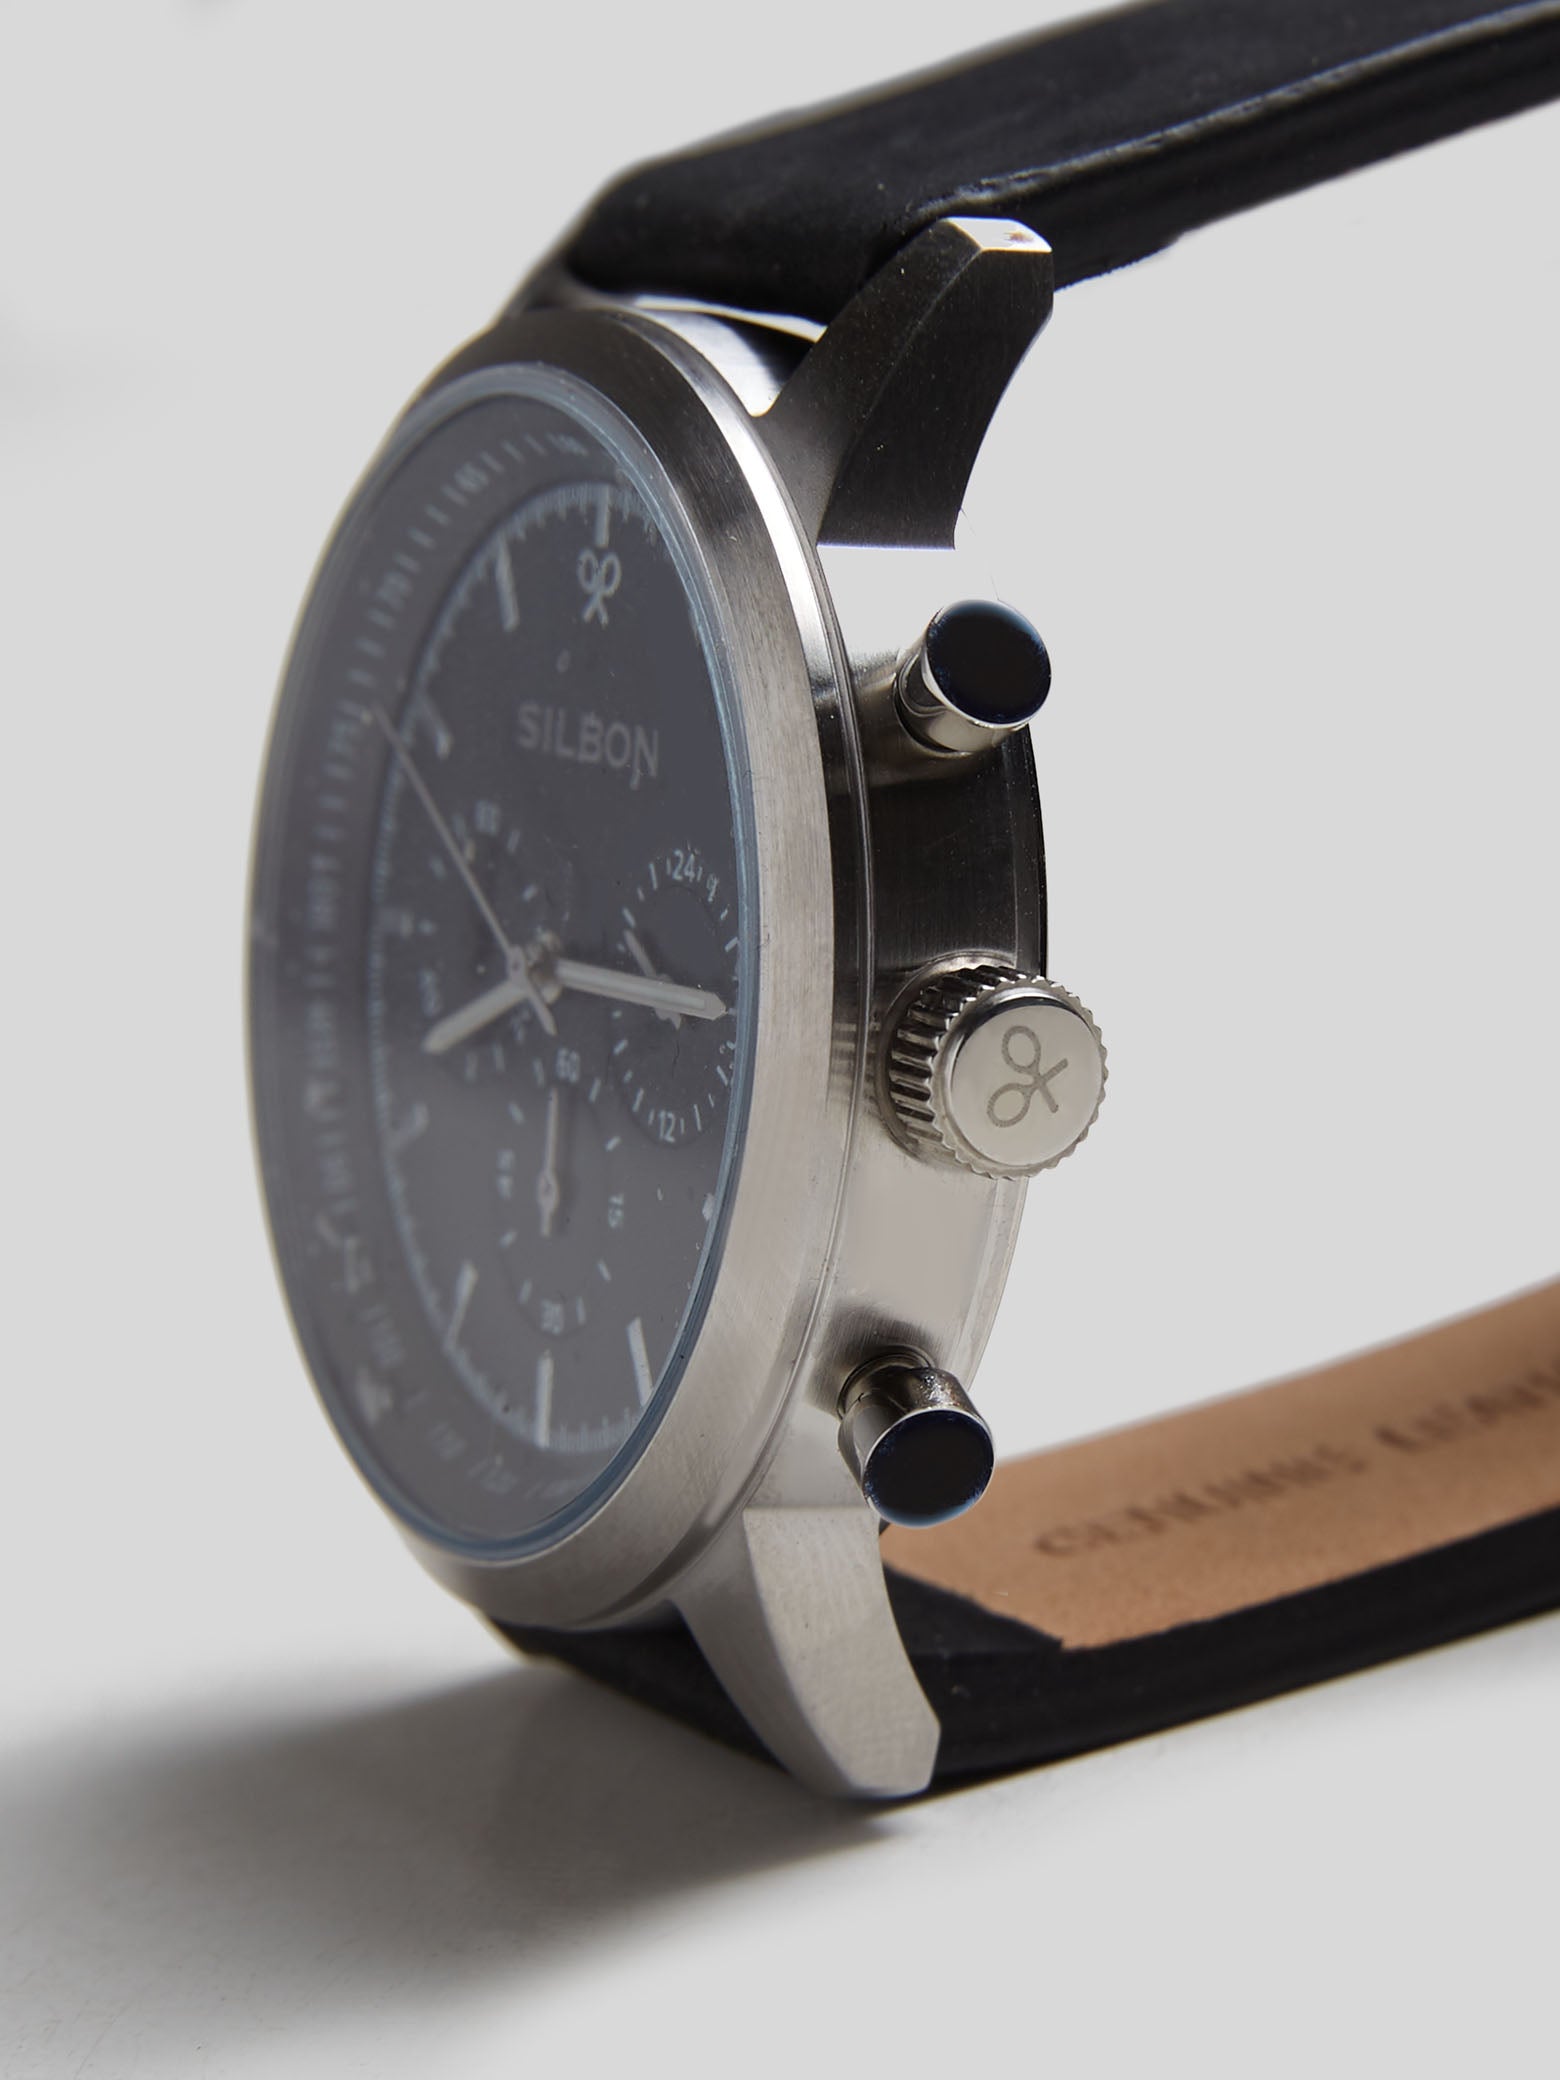 Reloj silbon limited edition negro